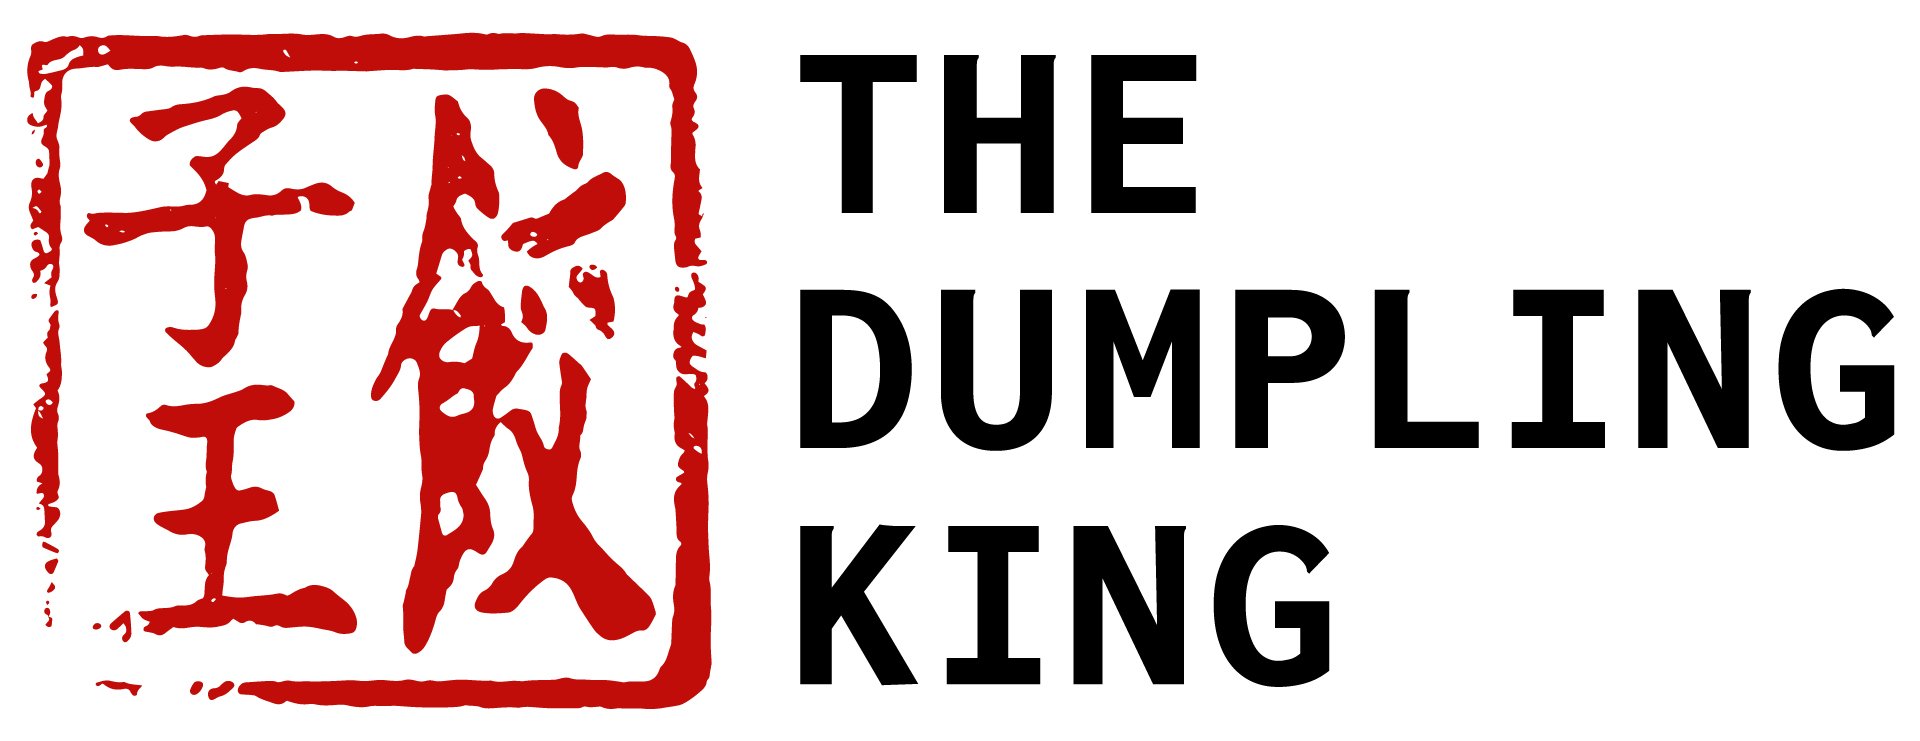 The Dumpling King